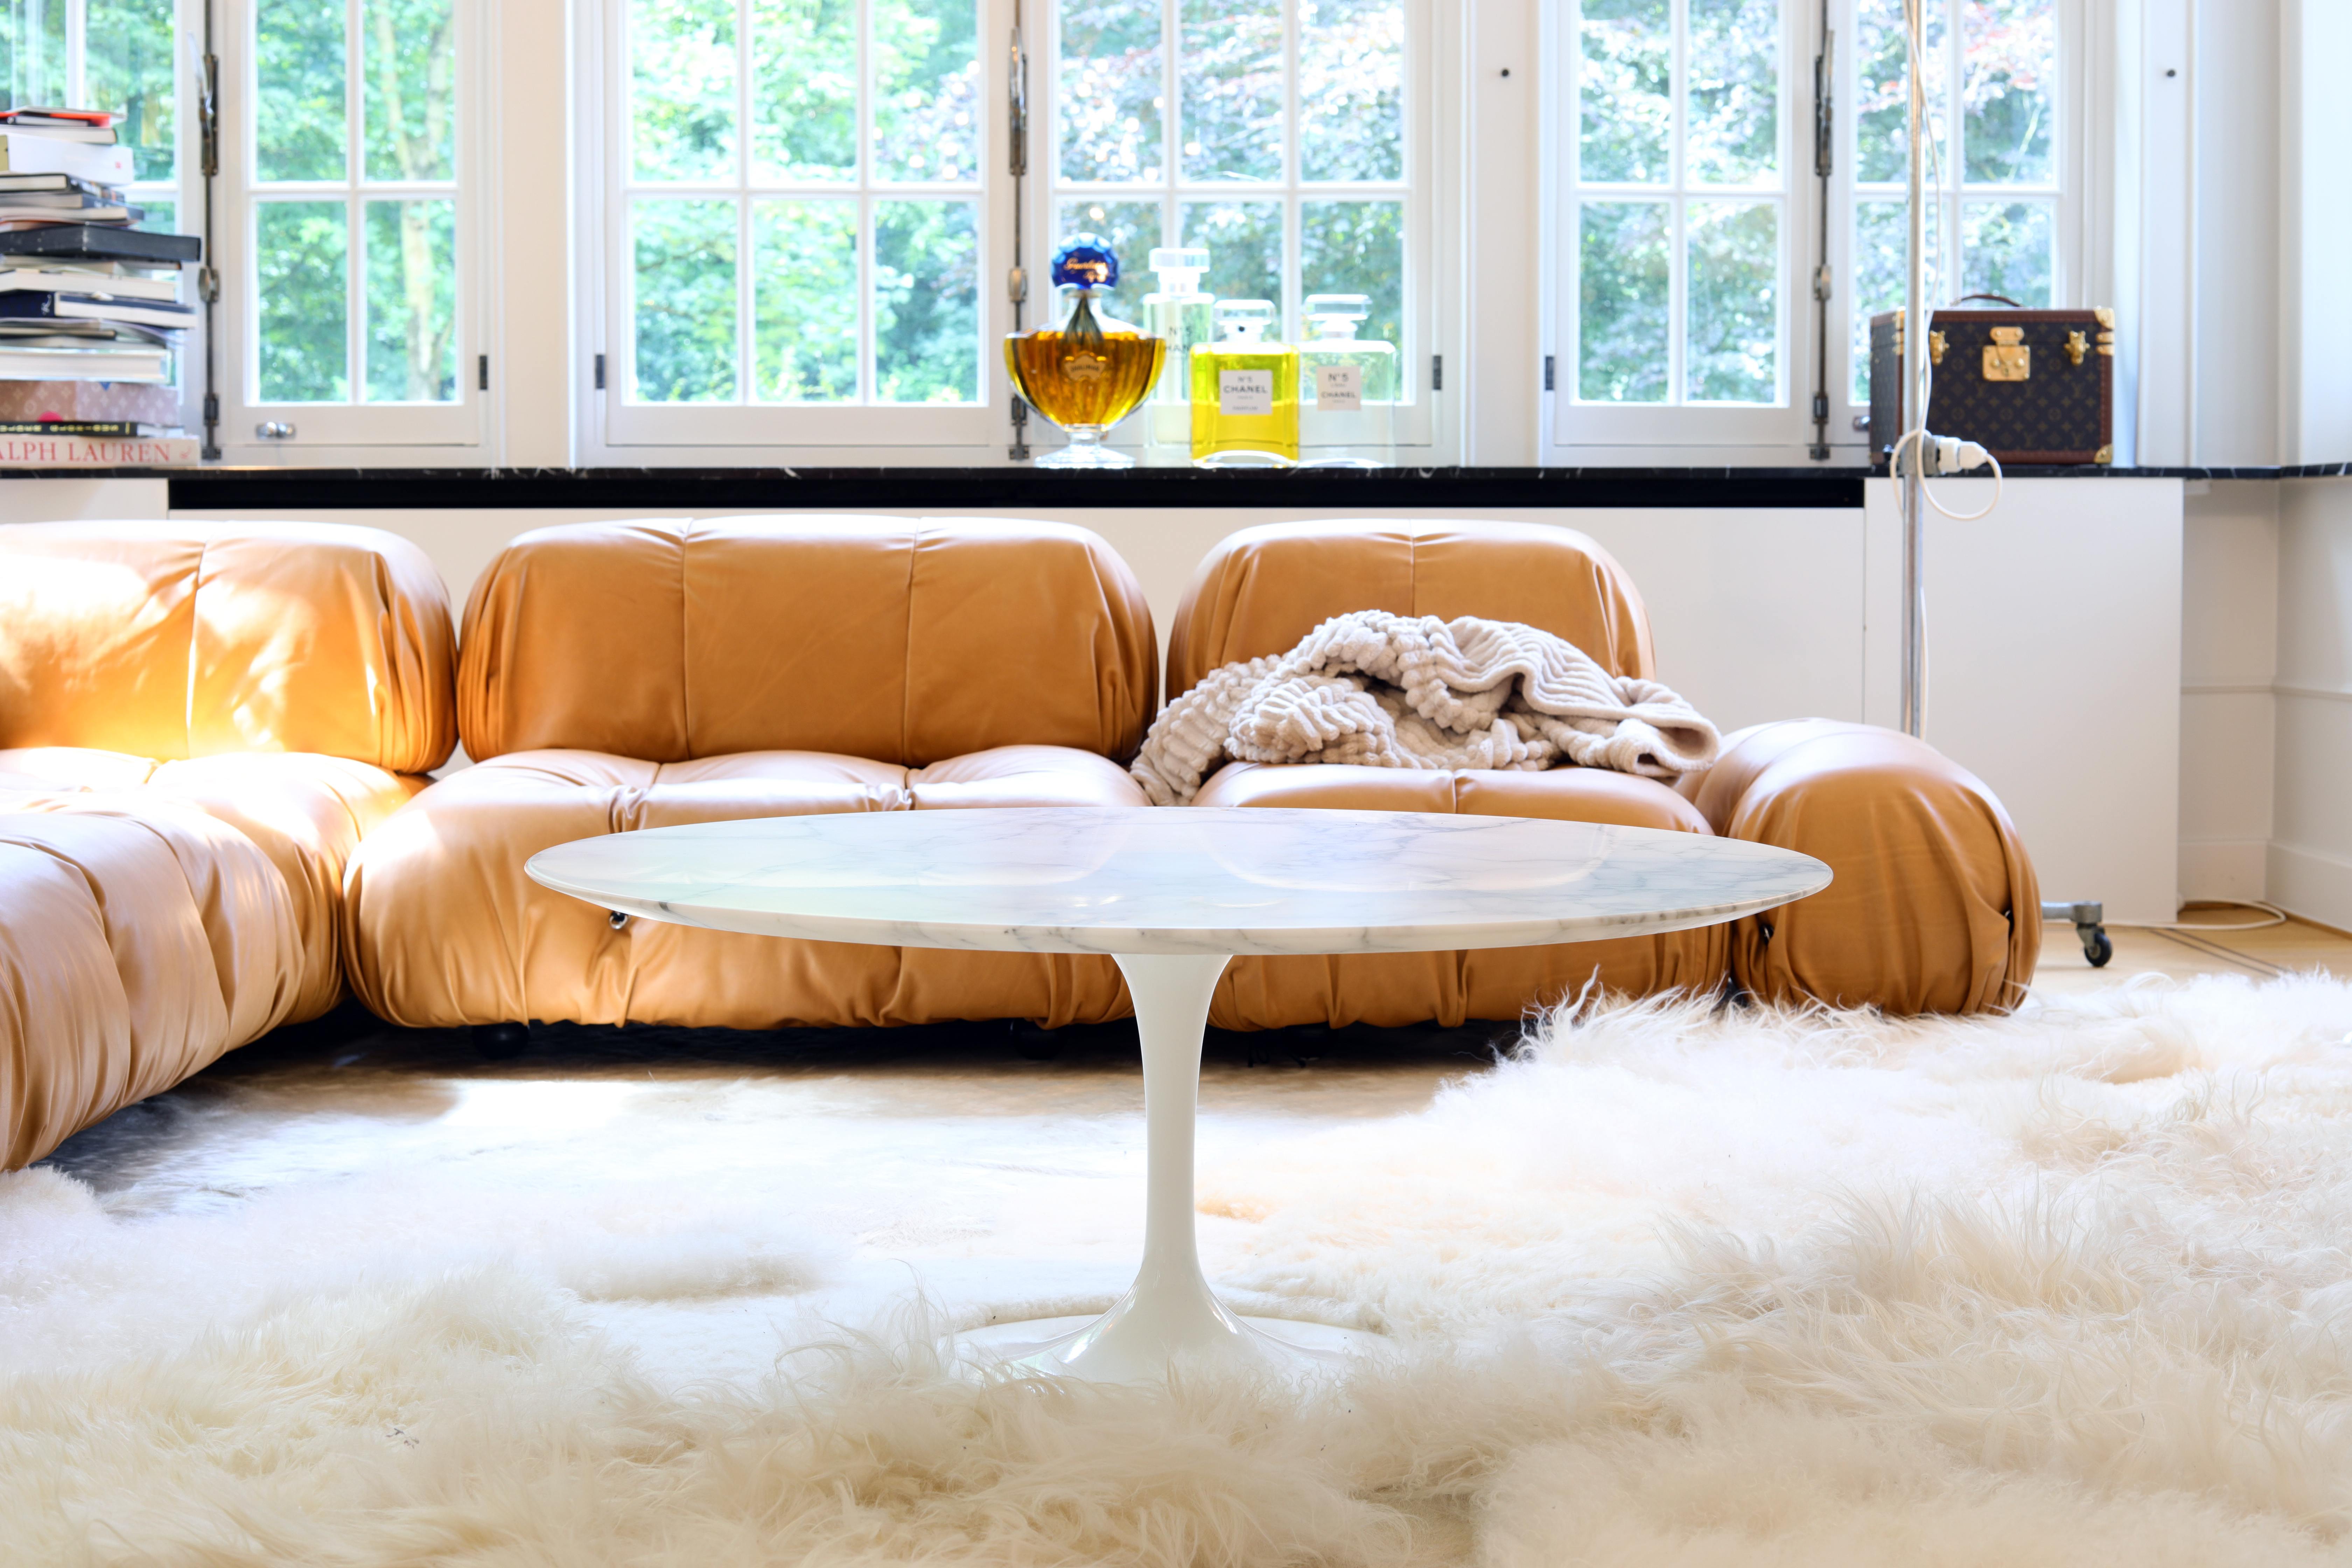 Tulip coffee table designed by Eero Saarinen for Knoll